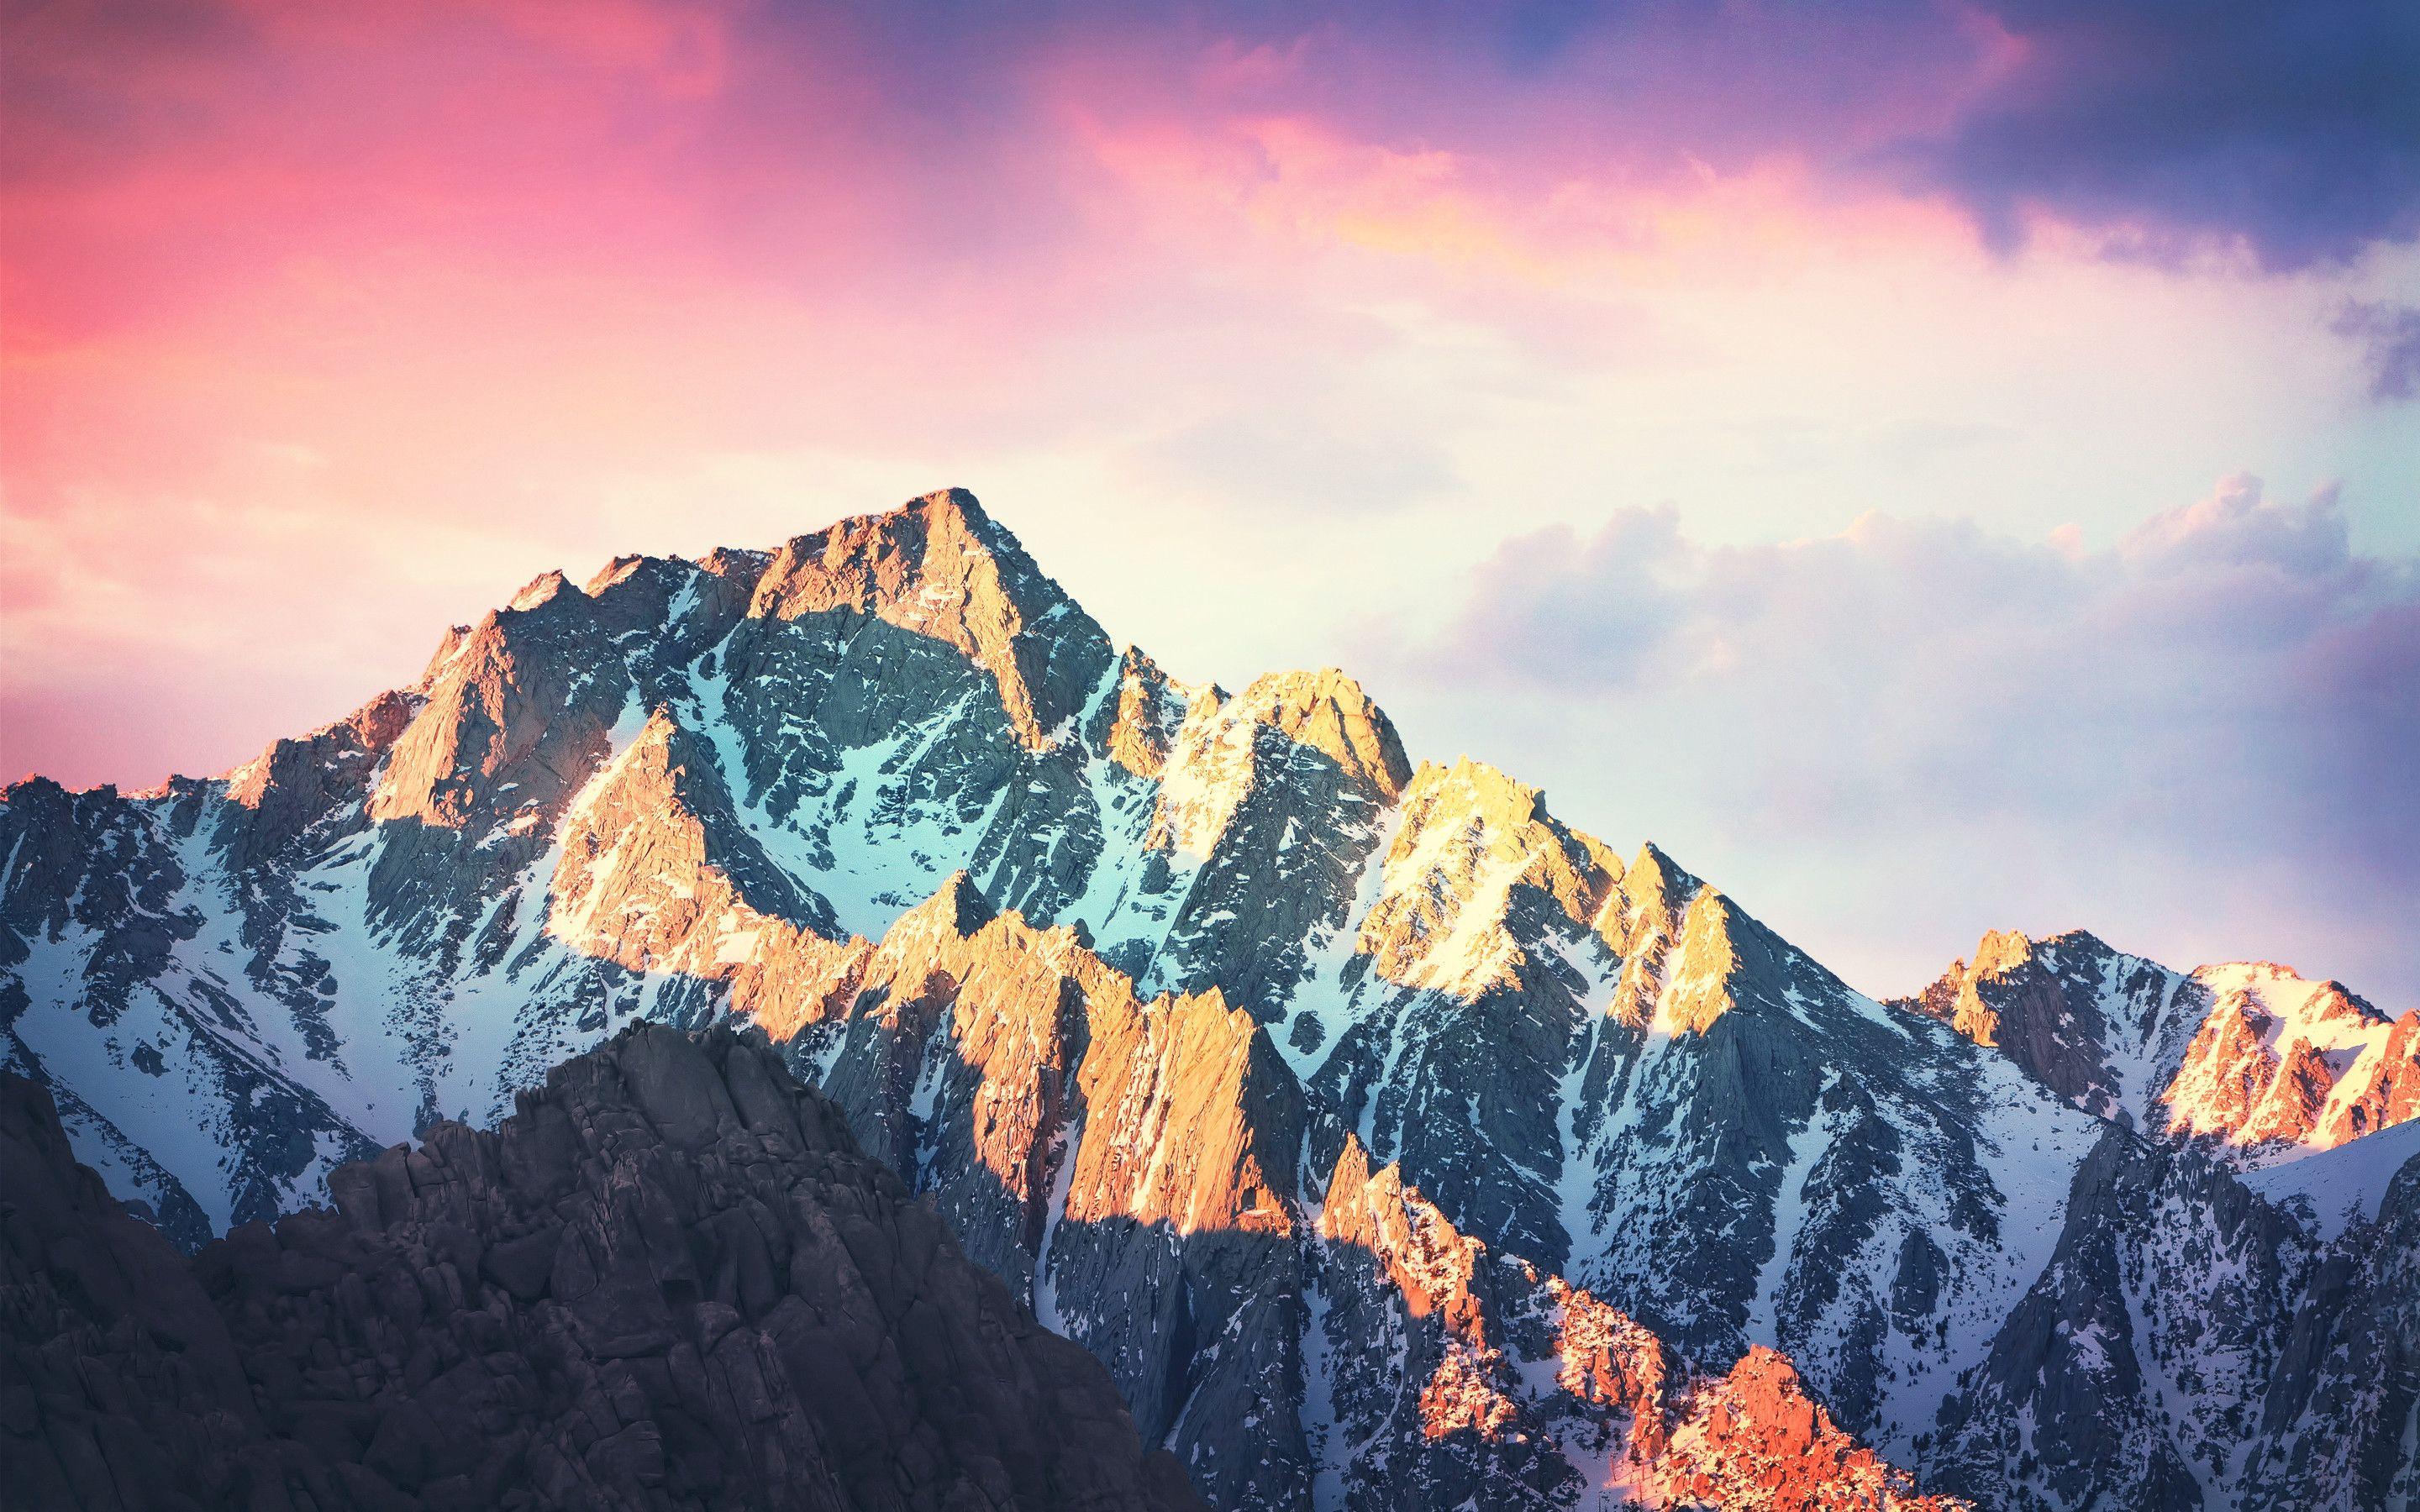 iMac Mountain Wallpapers - Top Free iMac Mountain Backgrounds ...